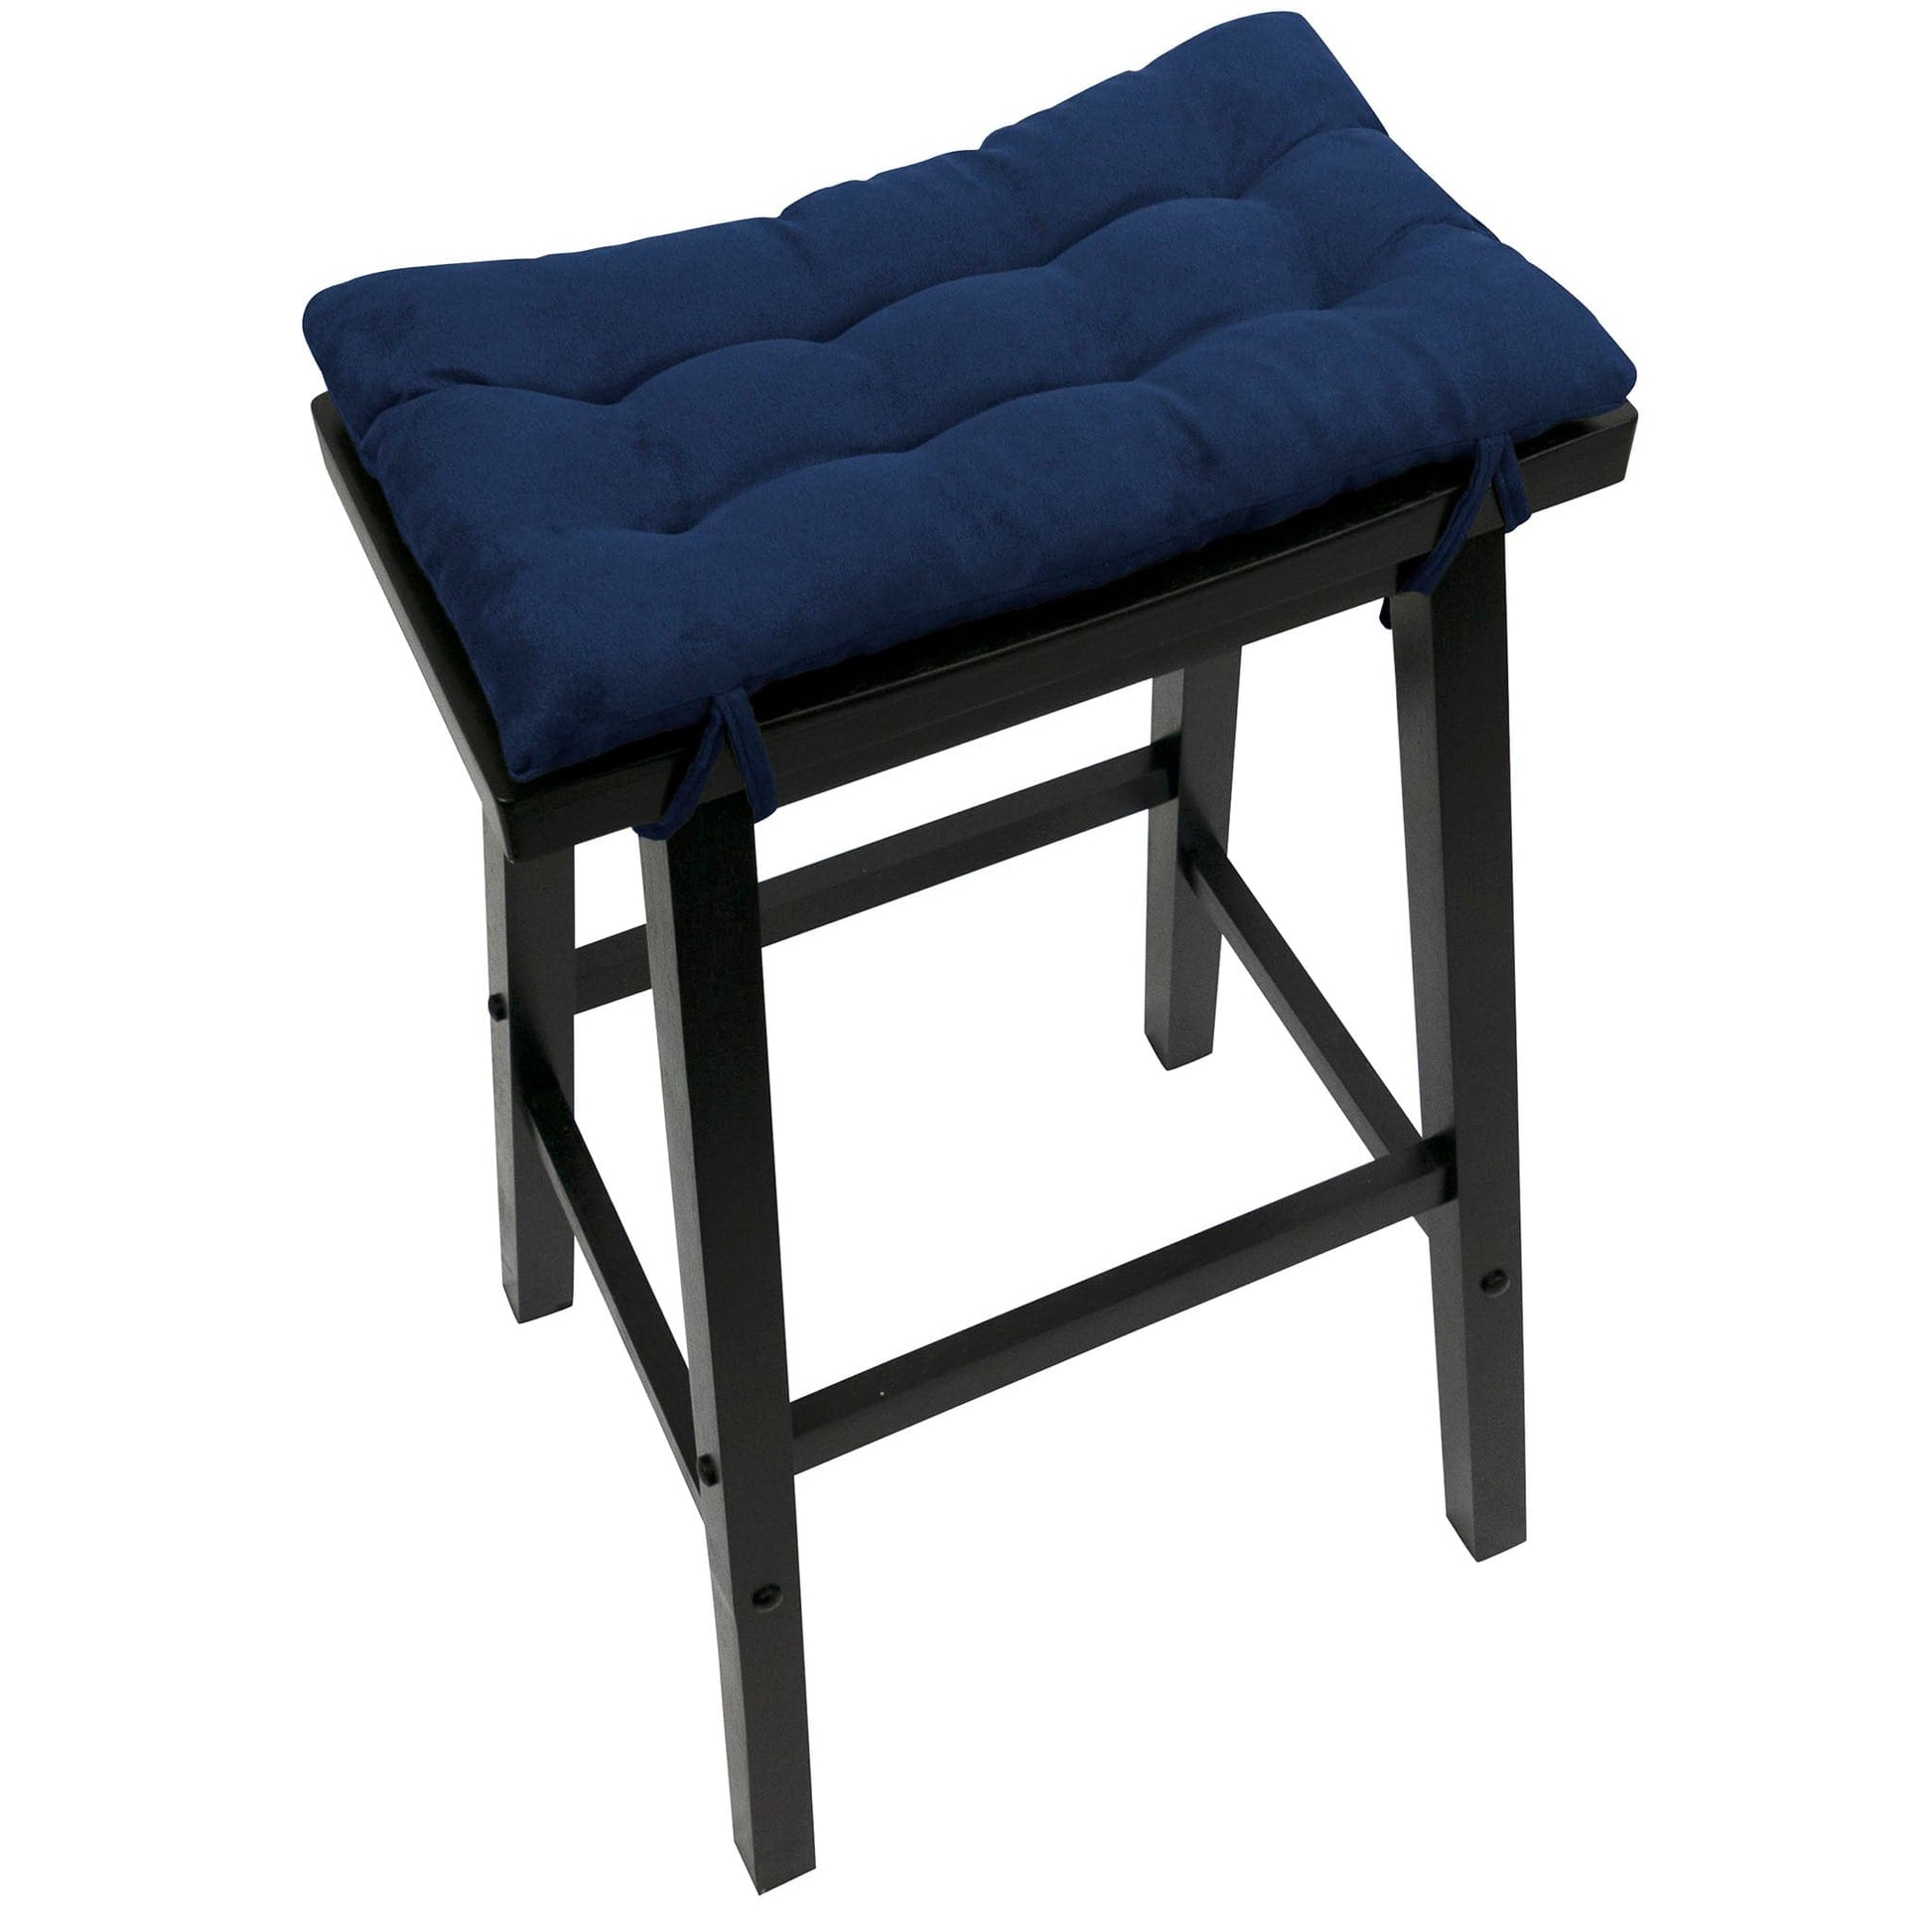 Micro-Suede Royal Blue Saddle Stool Cushions - Barnett Home Decor - Gaucho Stool - Satori Cushions